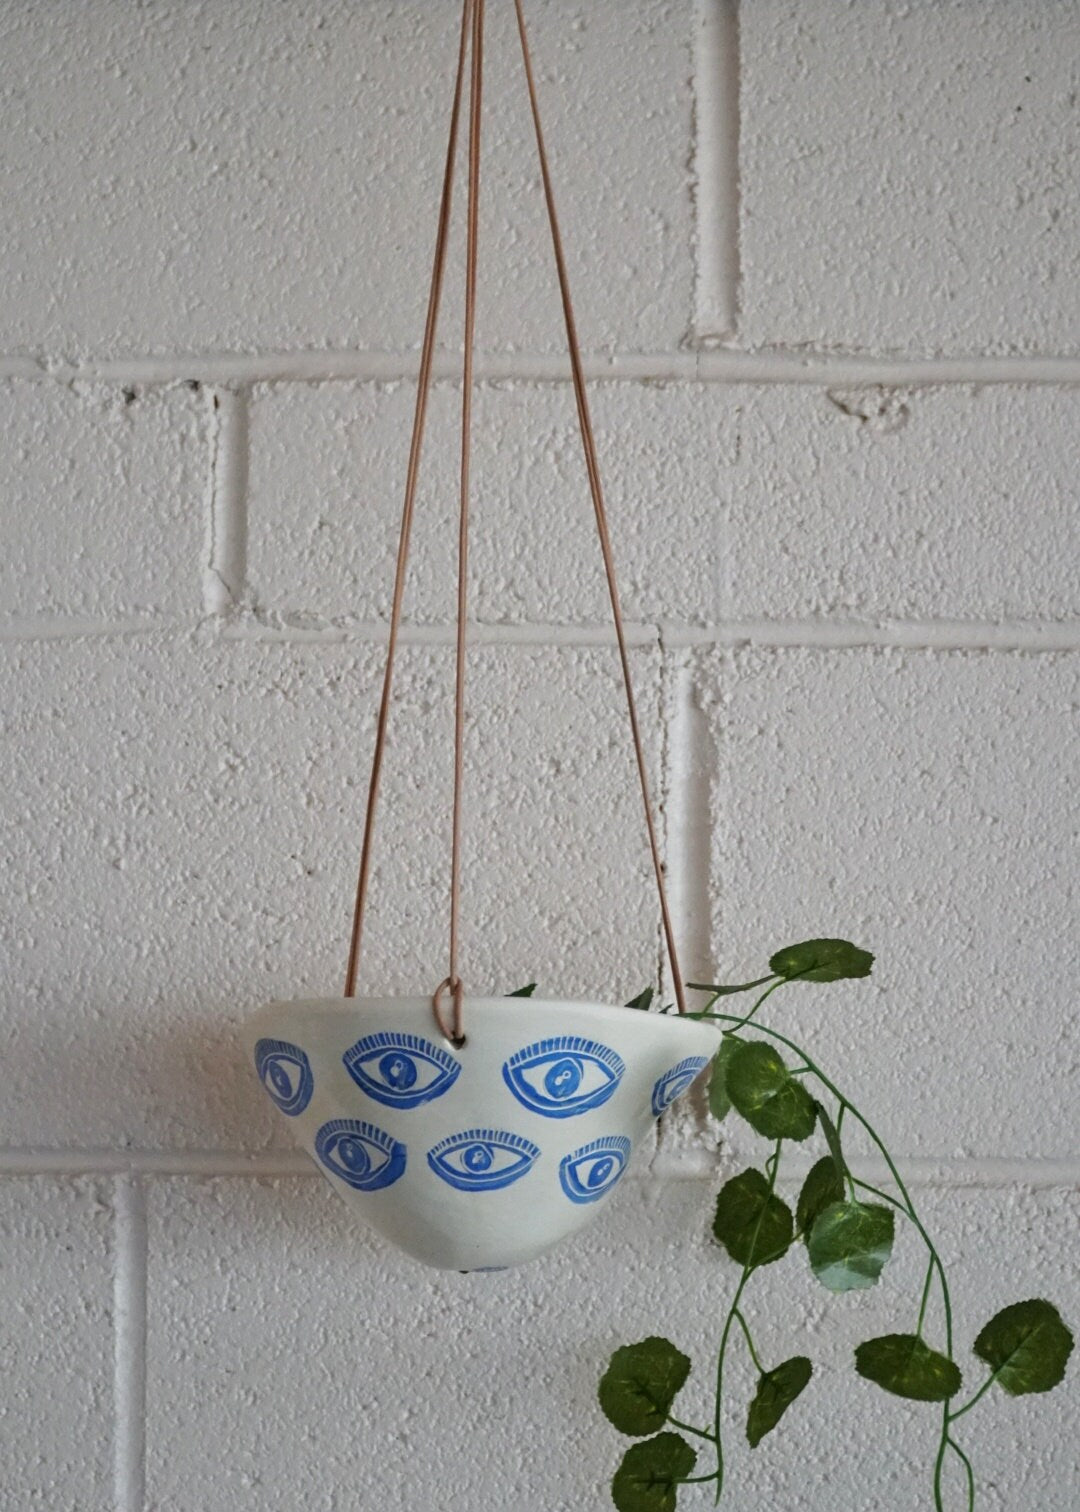 Blue & White Hanging Planter w/ Funky "Eye" Pattern Design - Ceramic Hanging Planter - Pottery - Succulent Pot - Houseplant - Planter